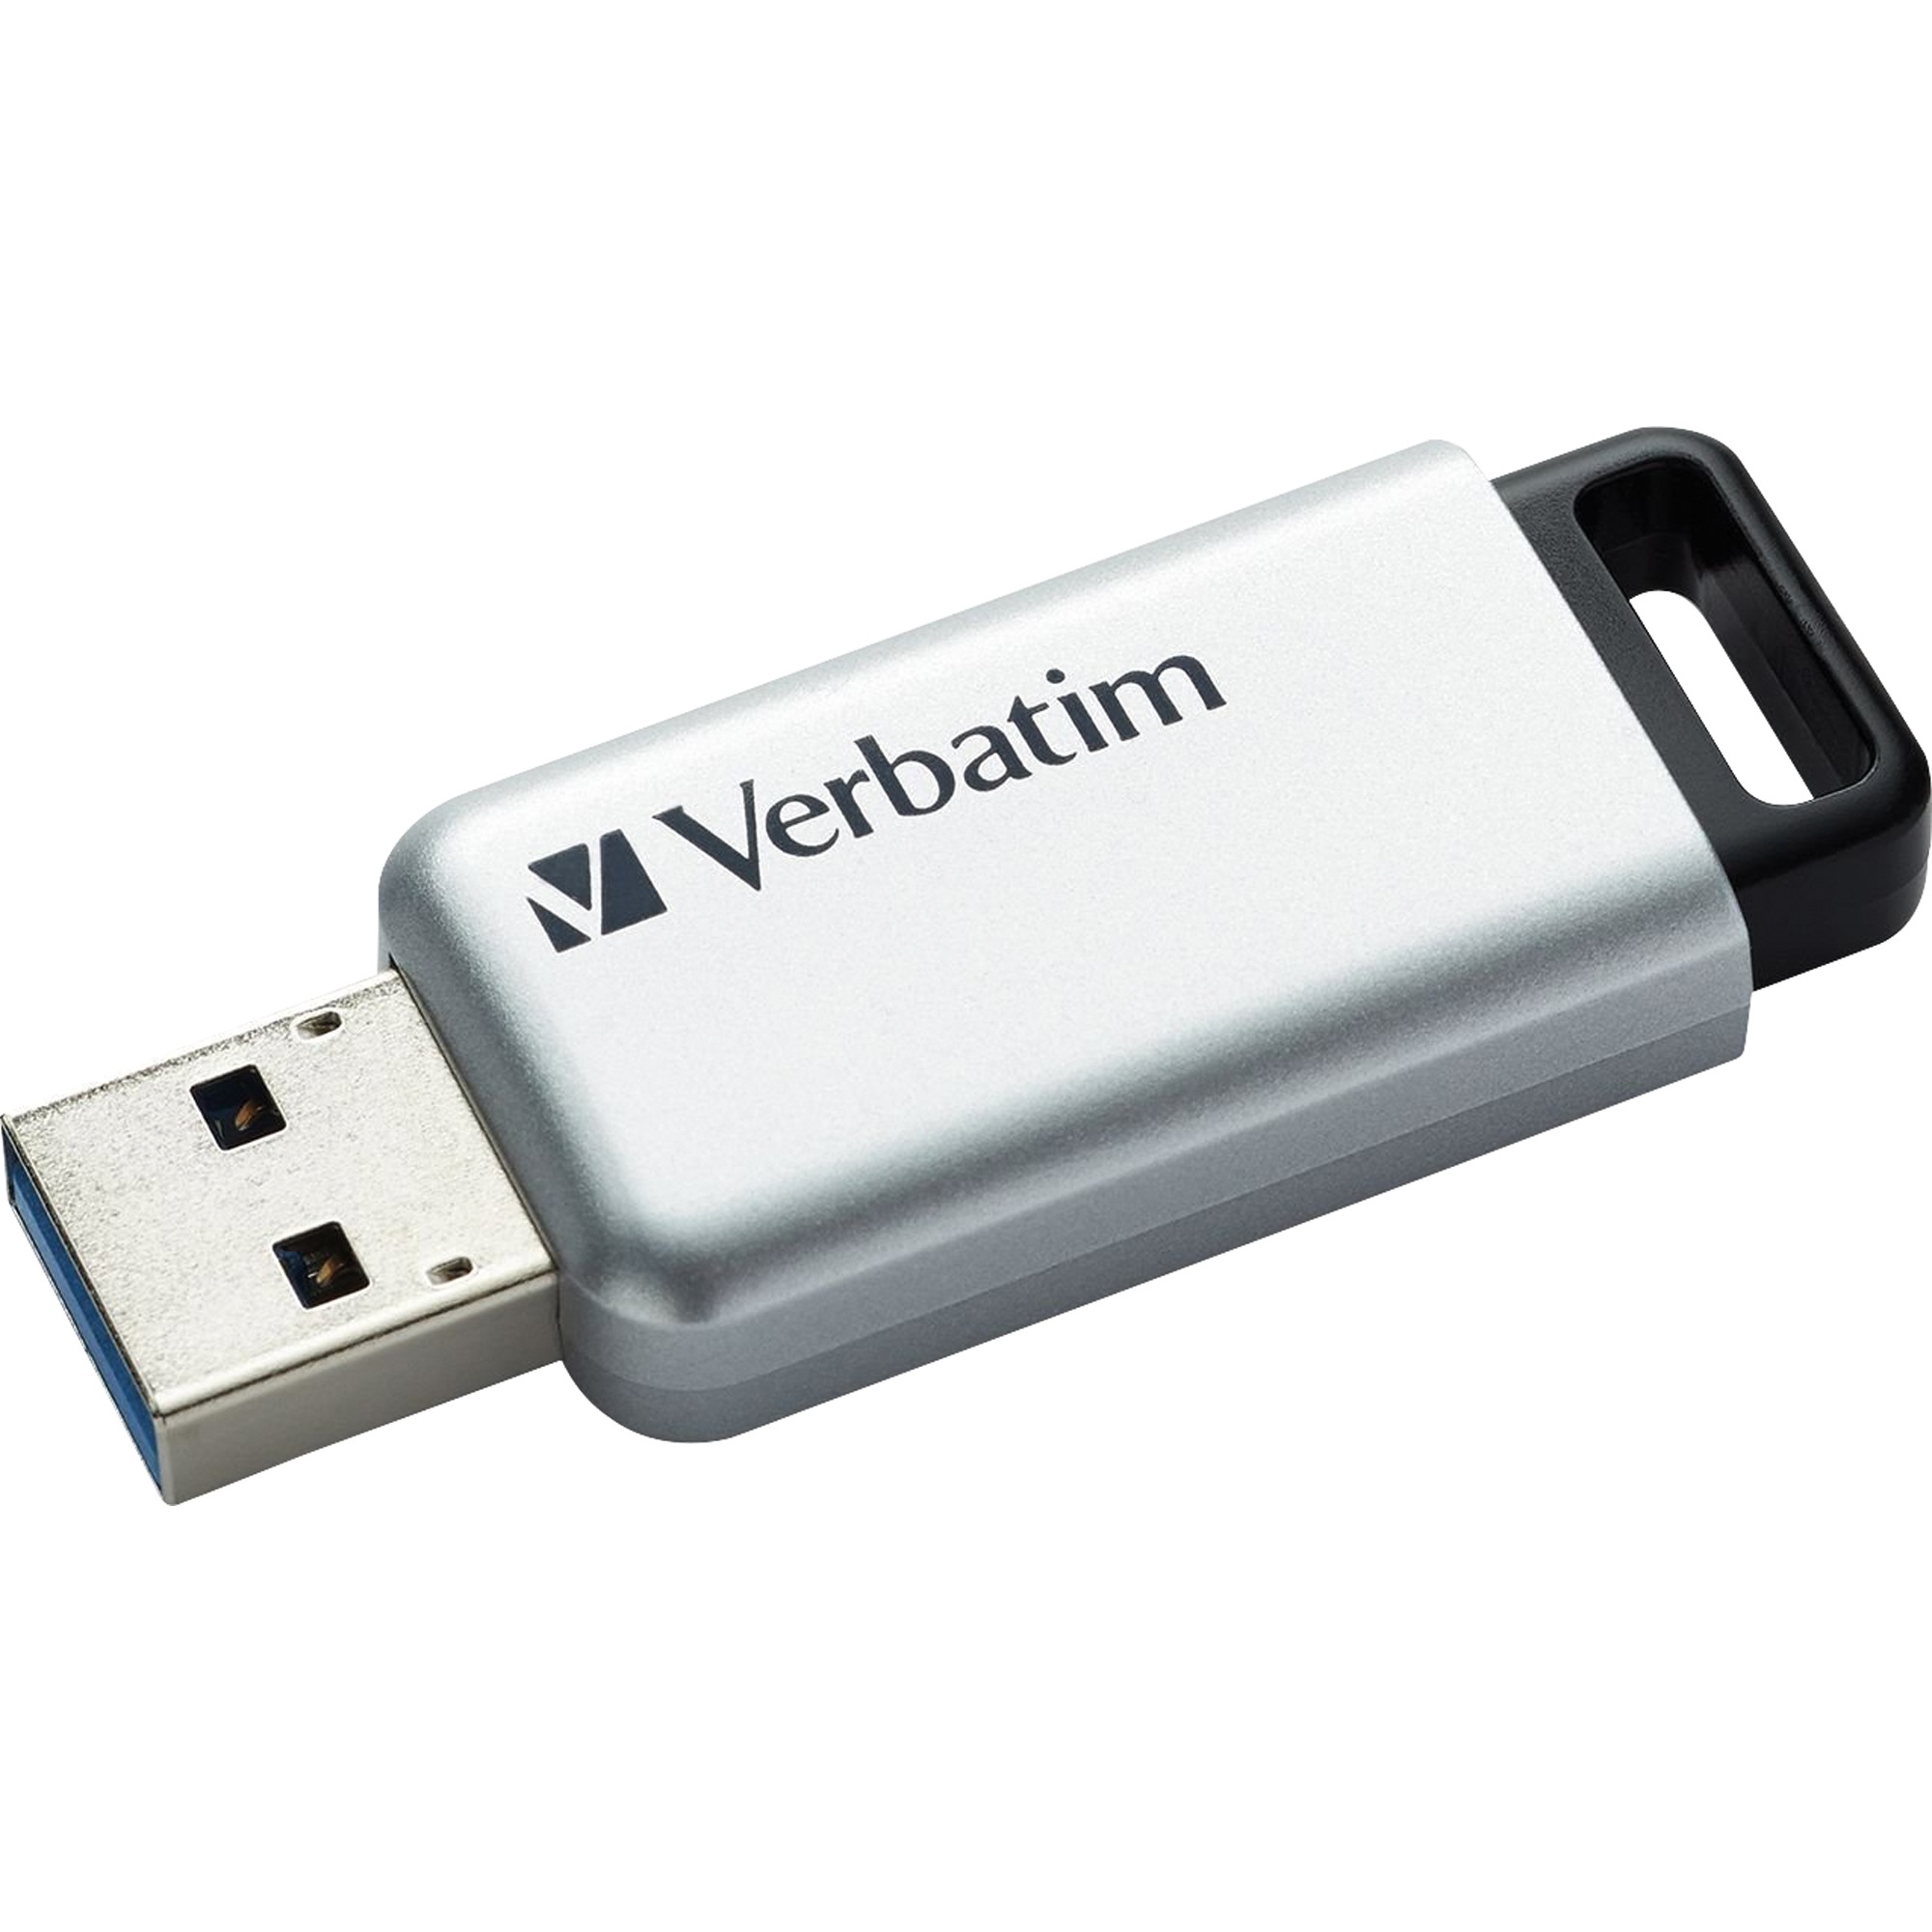 Verbatim USB-Stick Secure Pro 32 Gbyte